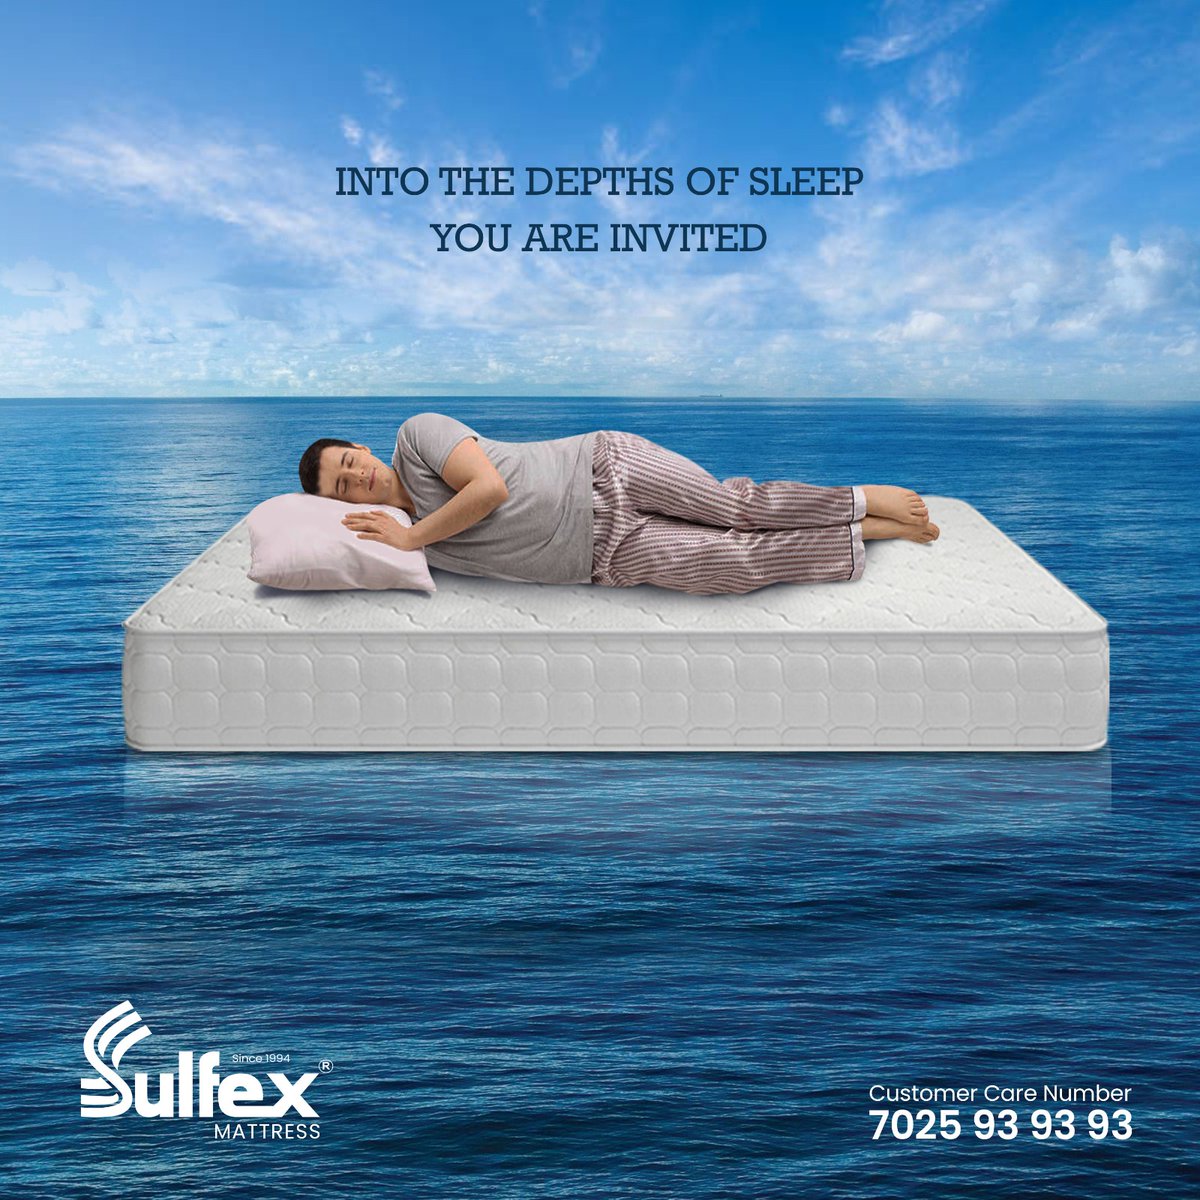 Dive into the depths of sleep with Sulfex mattress

#SleepBetter #GoodNightSleep #QualitySleep #DeepSleep #HealthySleep
#Bedding #Bedroom #Relaxation #Luxury